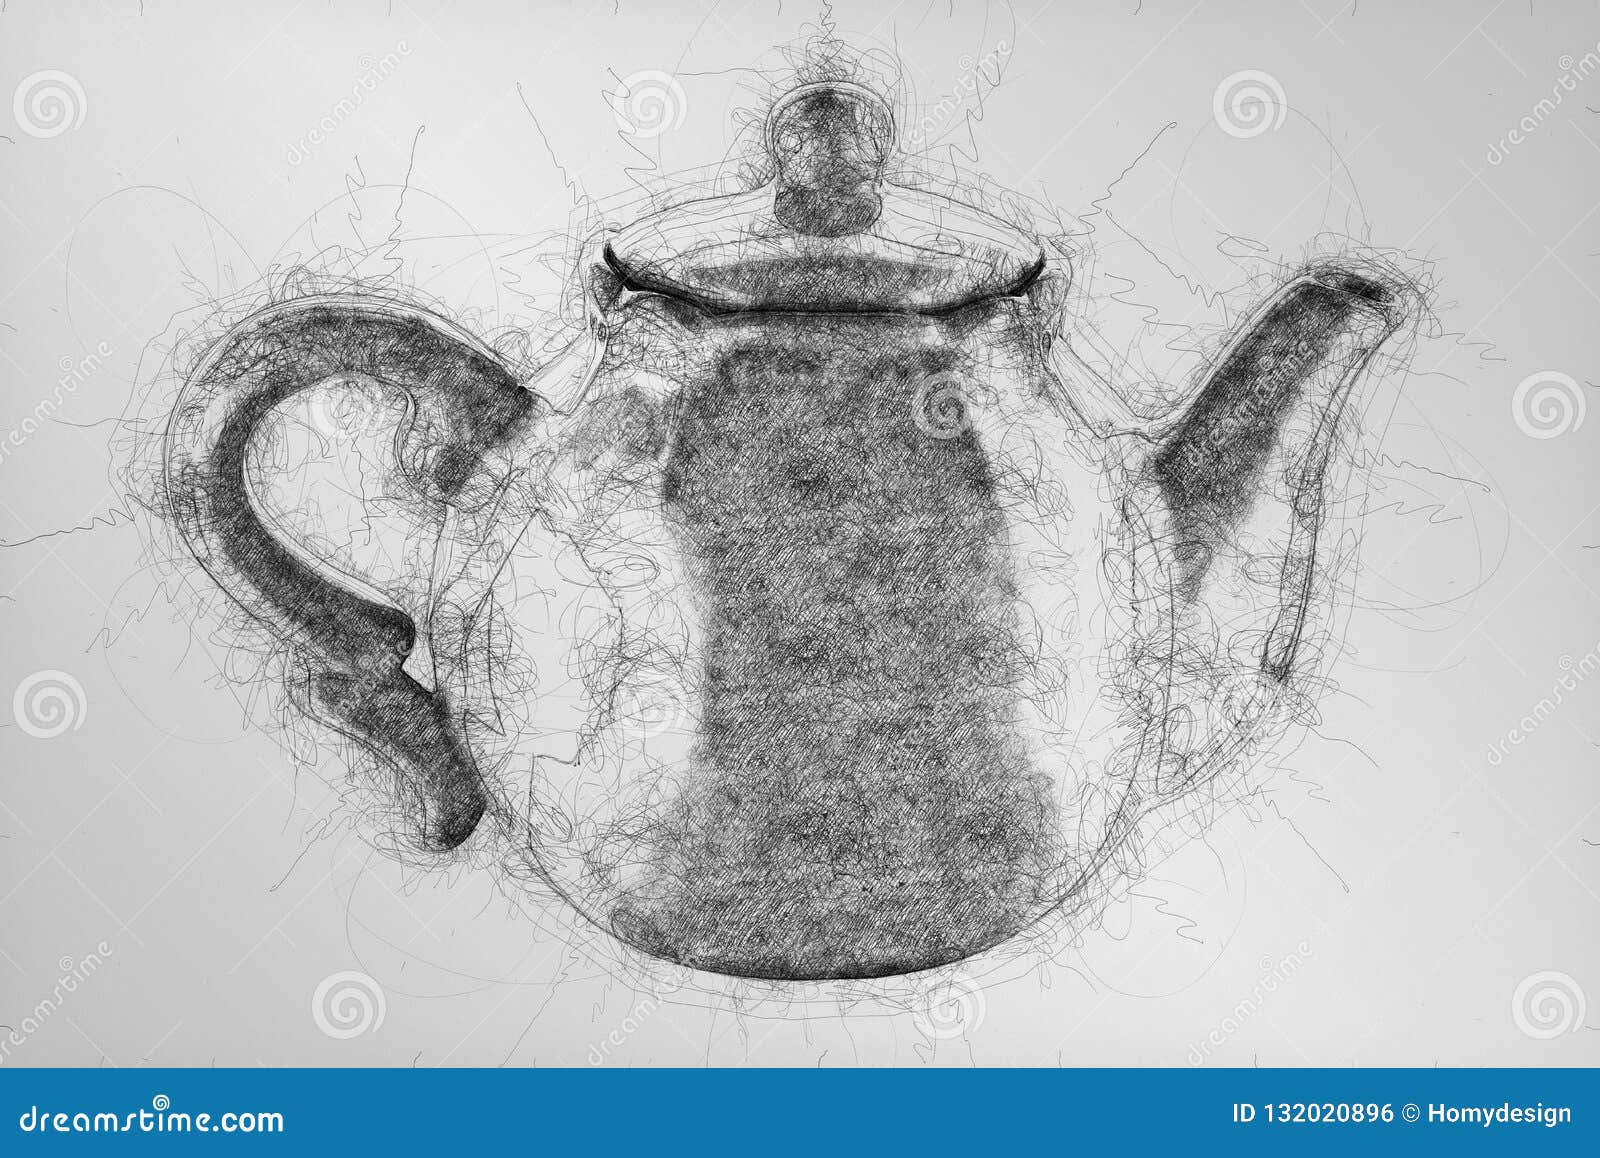 Explore 129+ Free Teapot Illustrations: Download Now - Pixabay